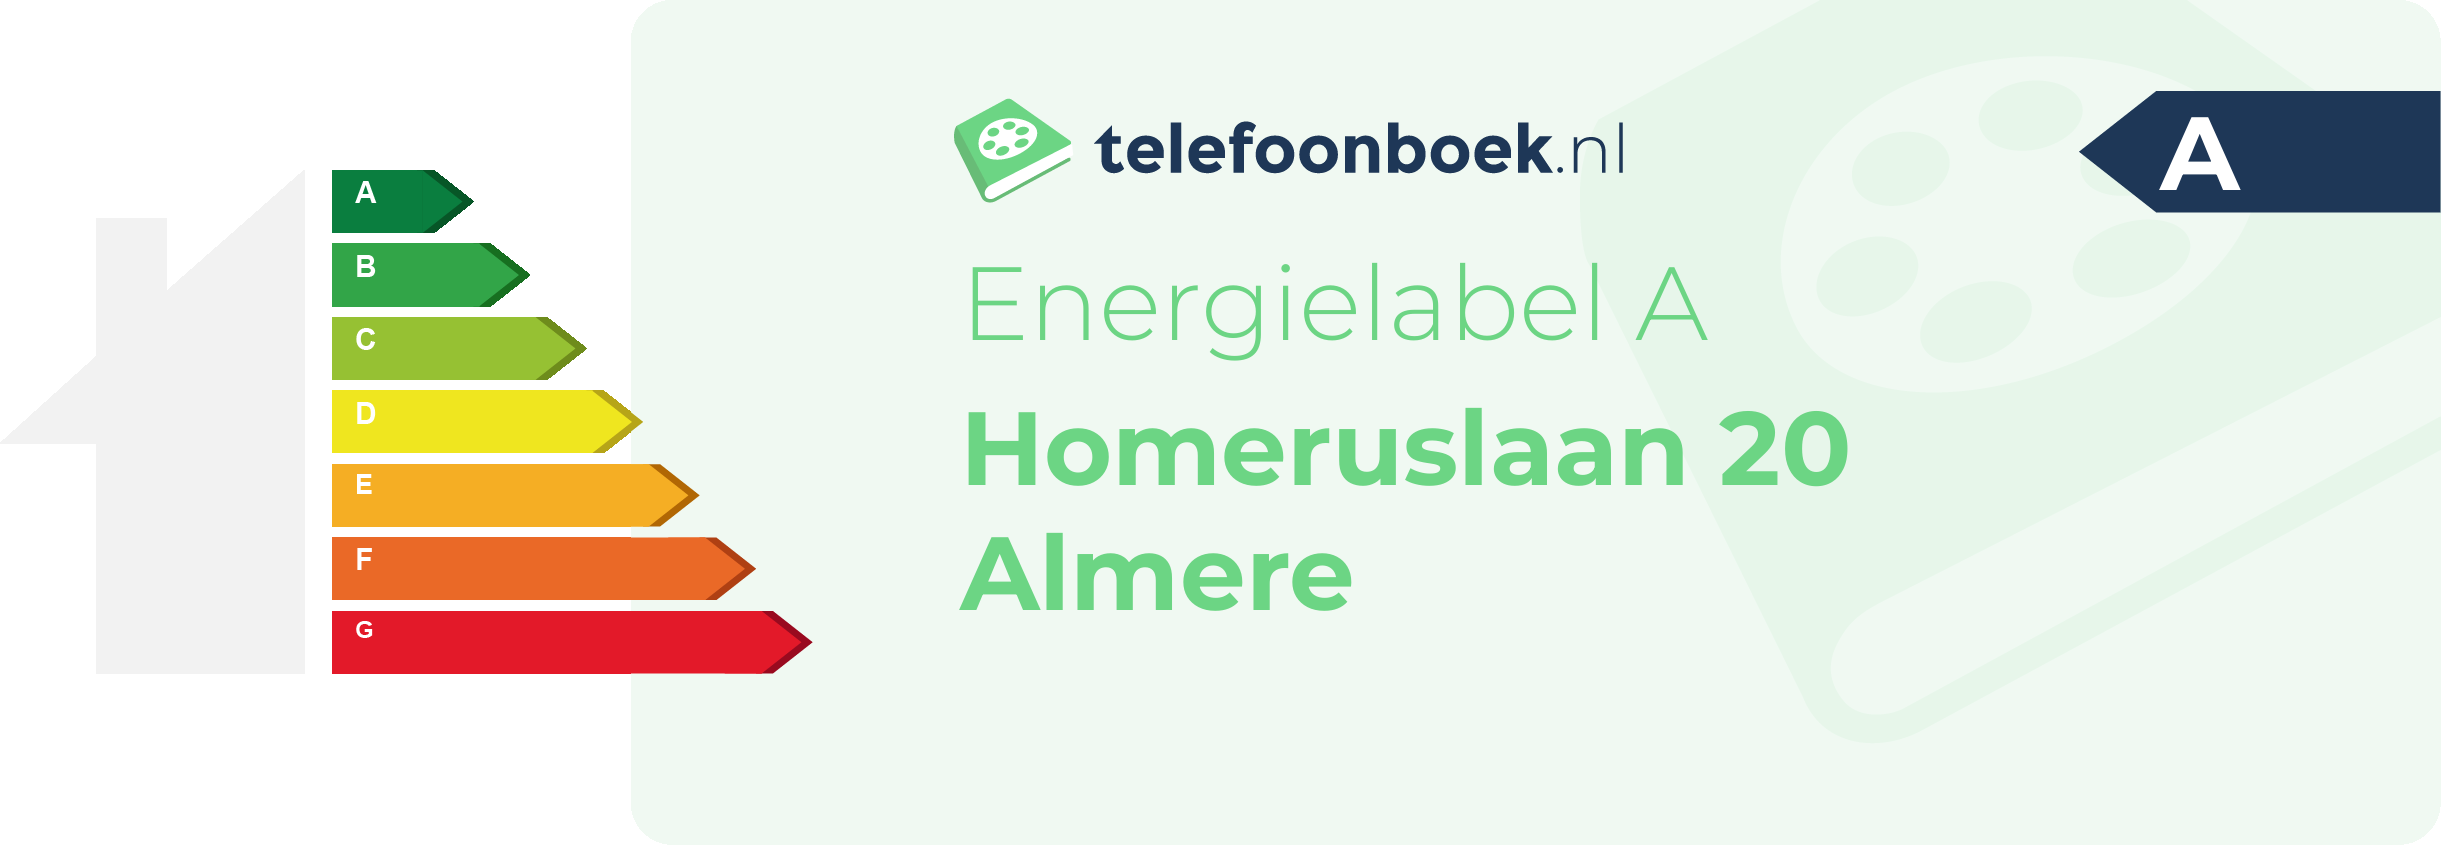 Energielabel Homeruslaan 20 Almere